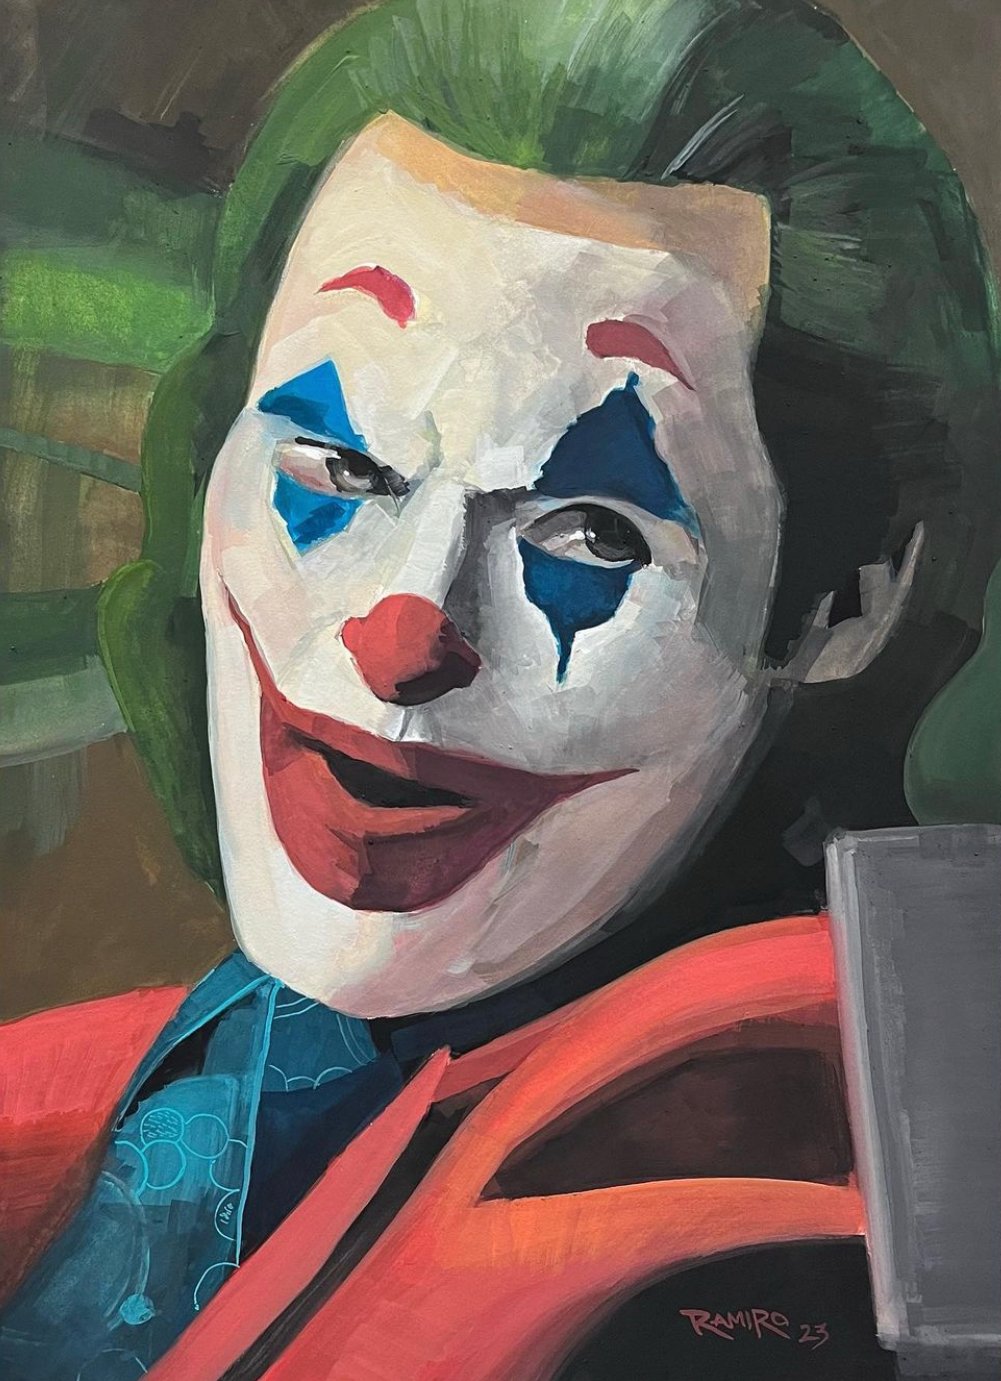 Image of "Joker", Gouache on Illustration Board by Ramiro 